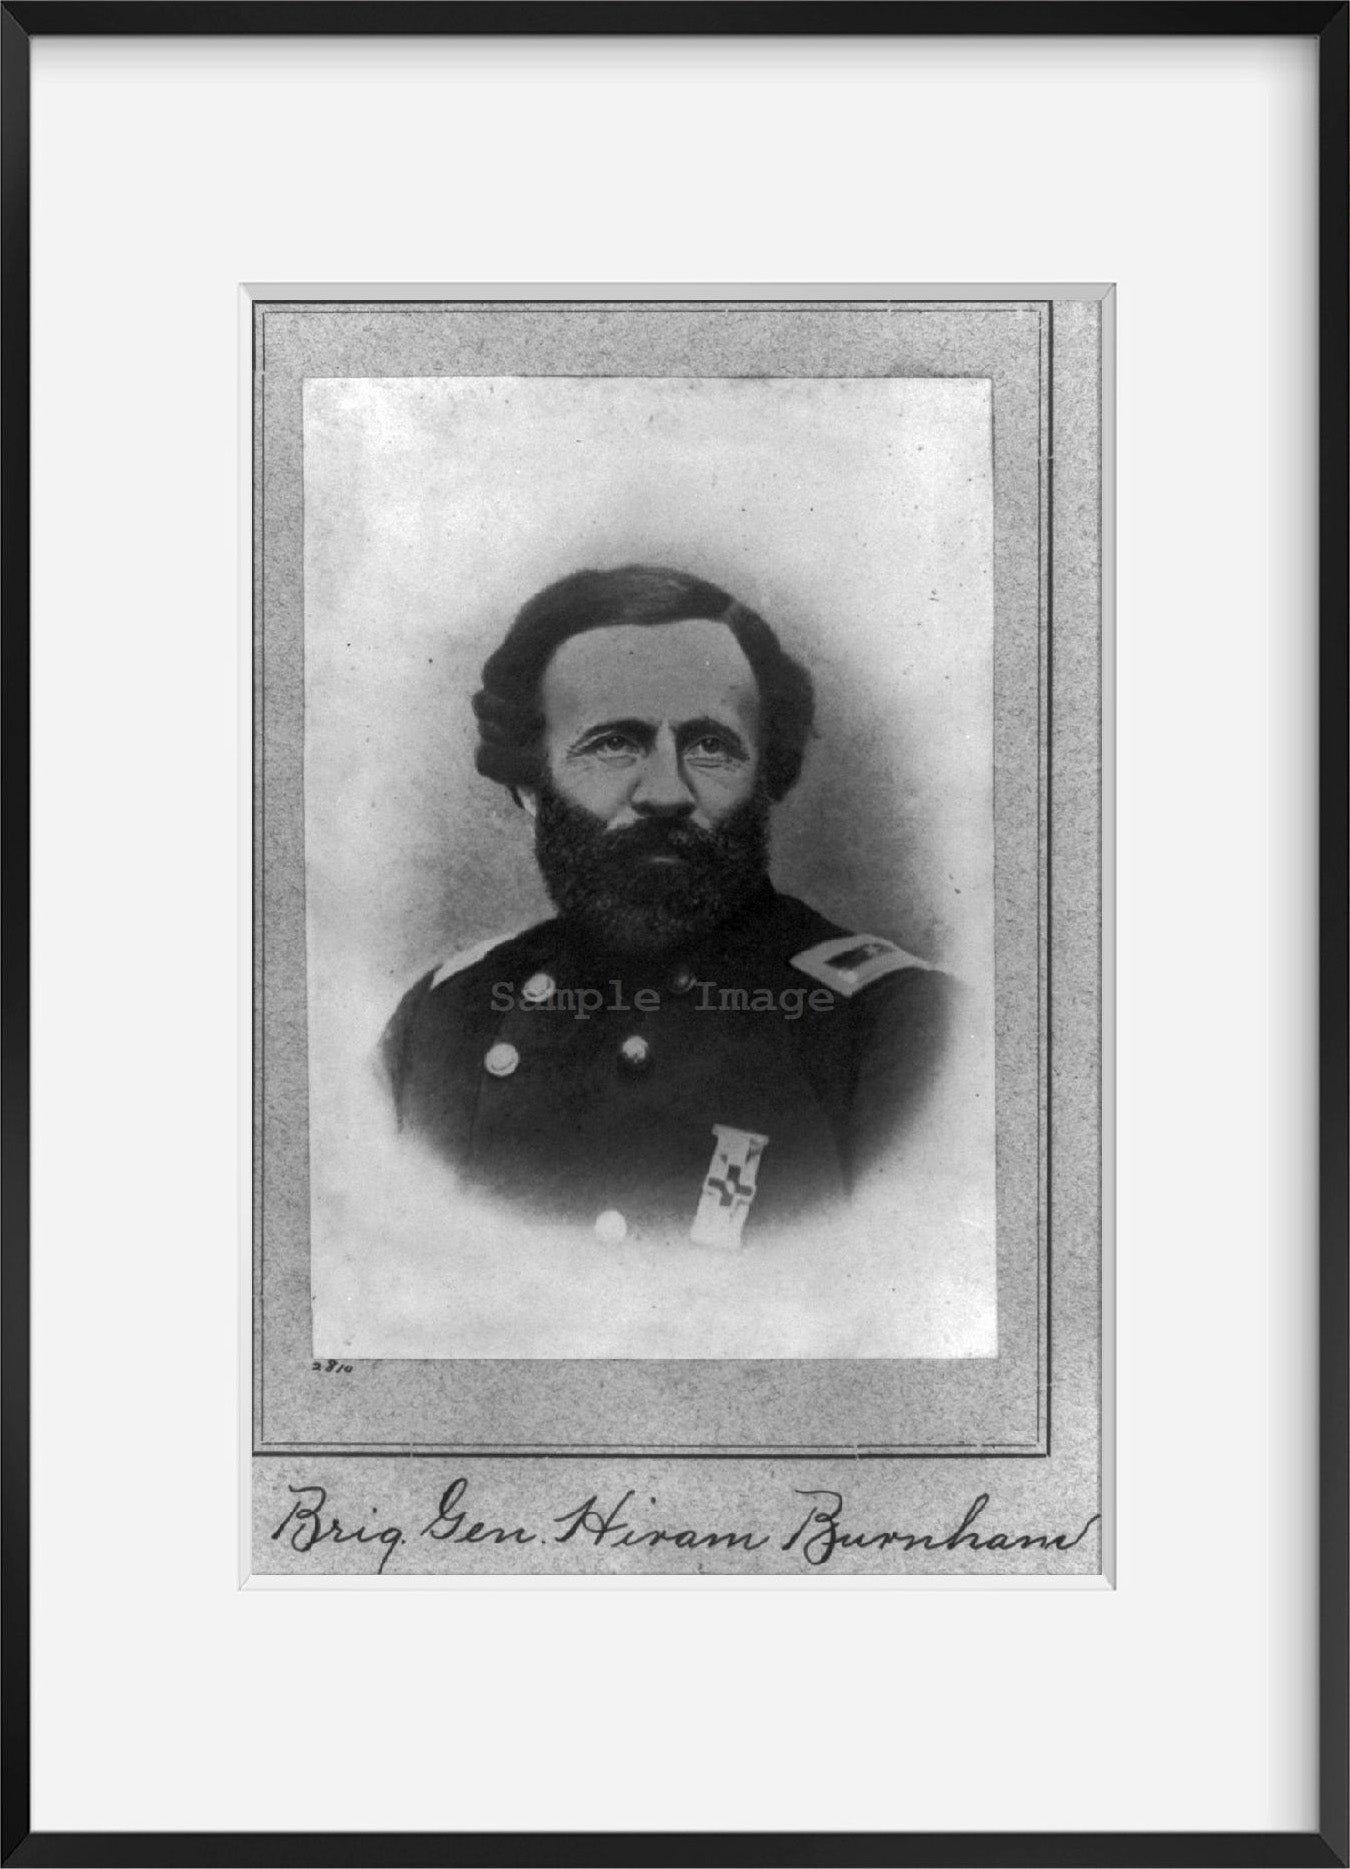 Photo: Brigadier General Hiram Burnham, 1814-1864, officer in Union Army, Civil War